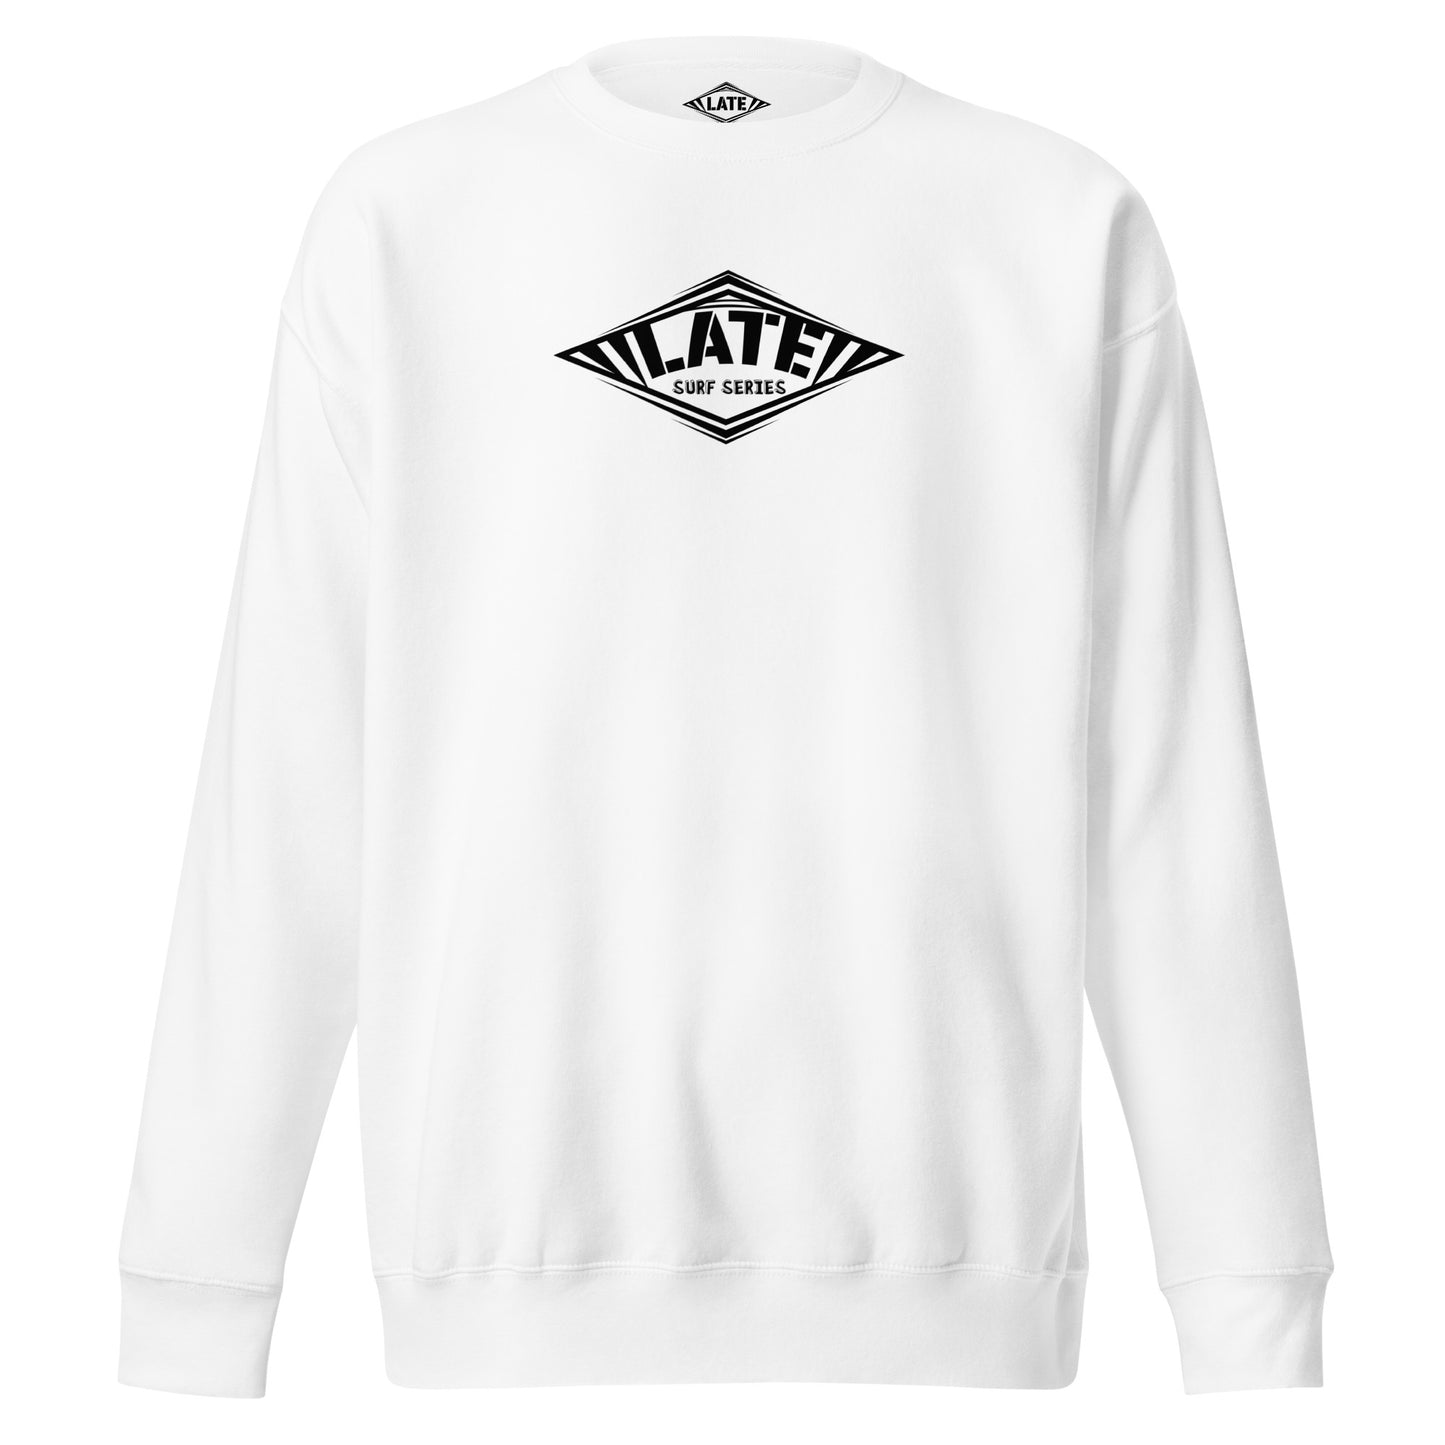 Sweatshirt Take On The Elements surf series logo Late sweat unisex blanc 